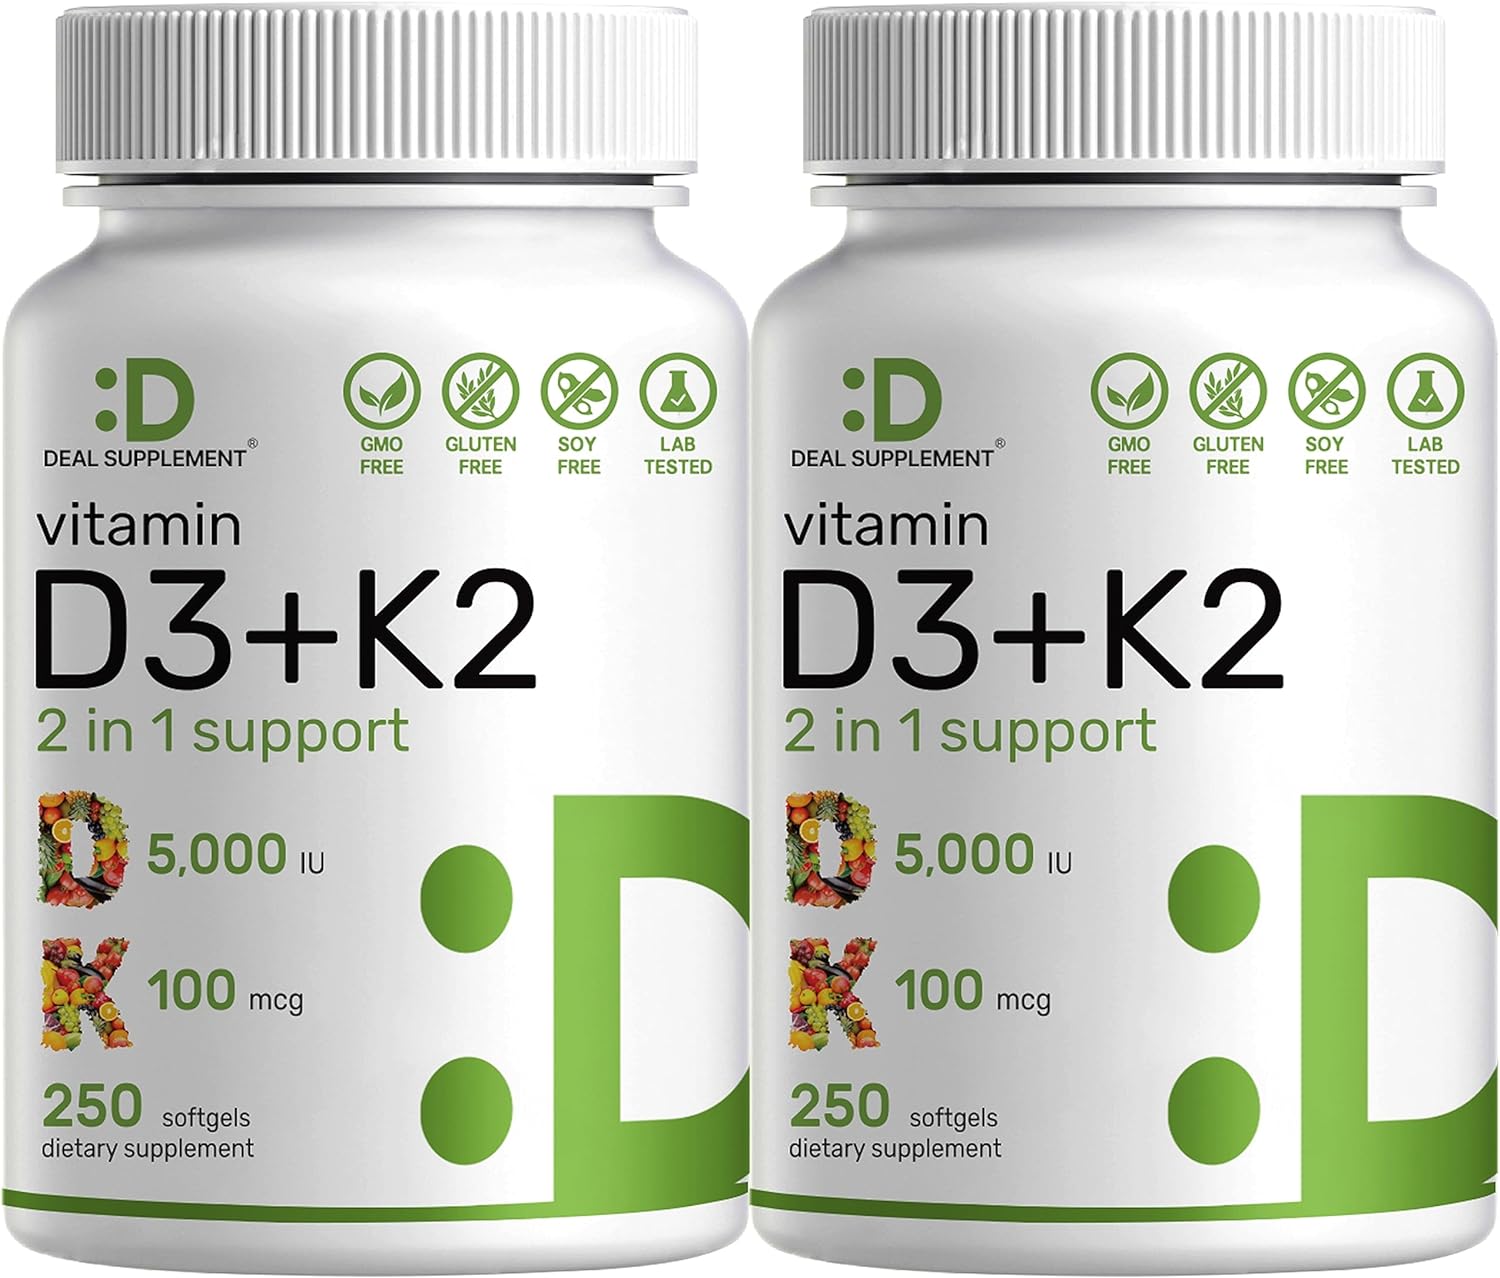 2 Pack Deal Supplement Vitamin D3 K2 Softgel, 250 Count, 2-1 Complex, Vitamin D3 5000 IU & Vitamin K2 MK7, Promotes Heart, Bone & Teeth Health – Very Easy to Swallow